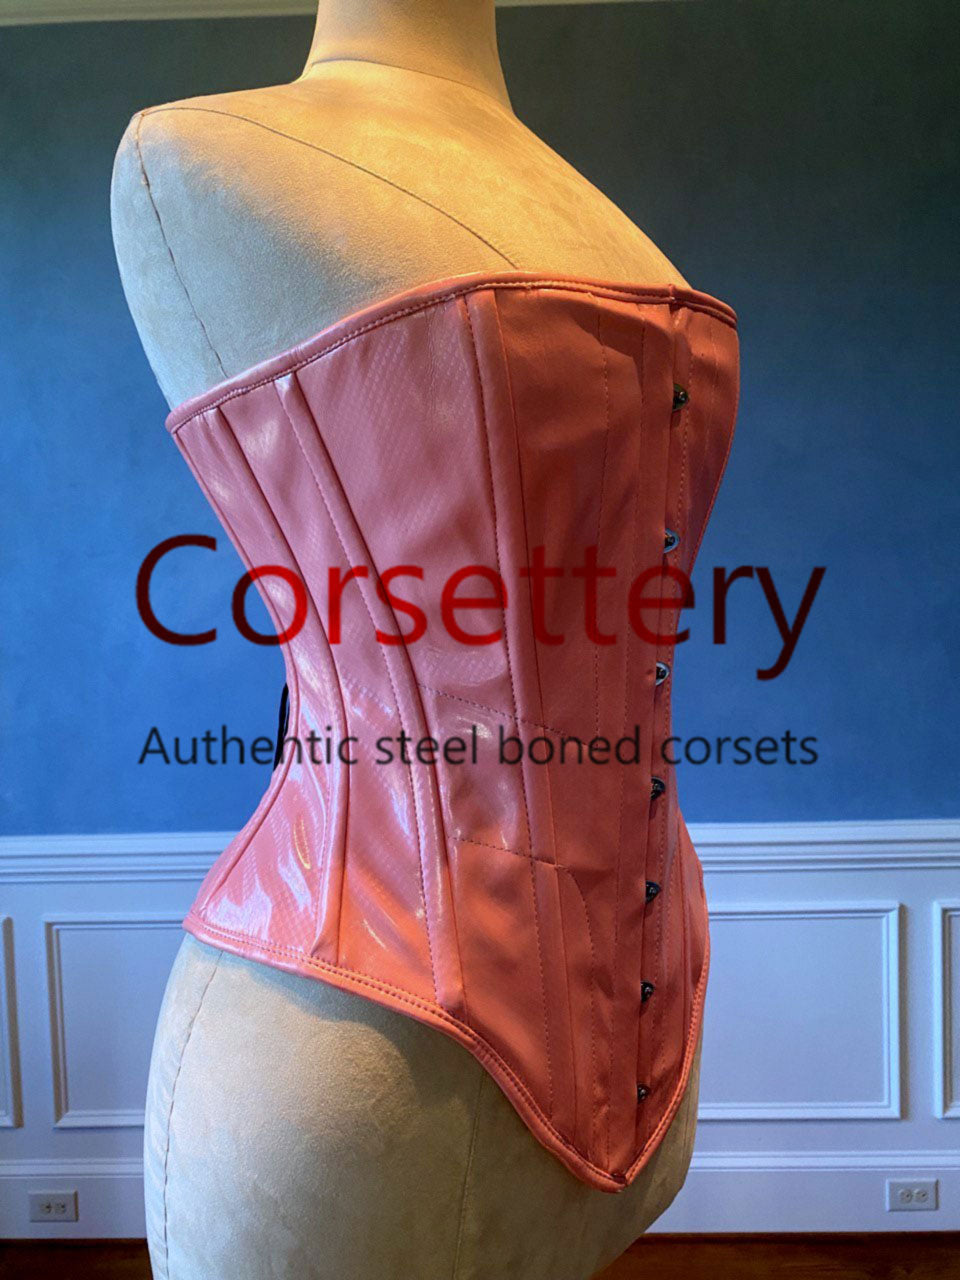 Pink corsets